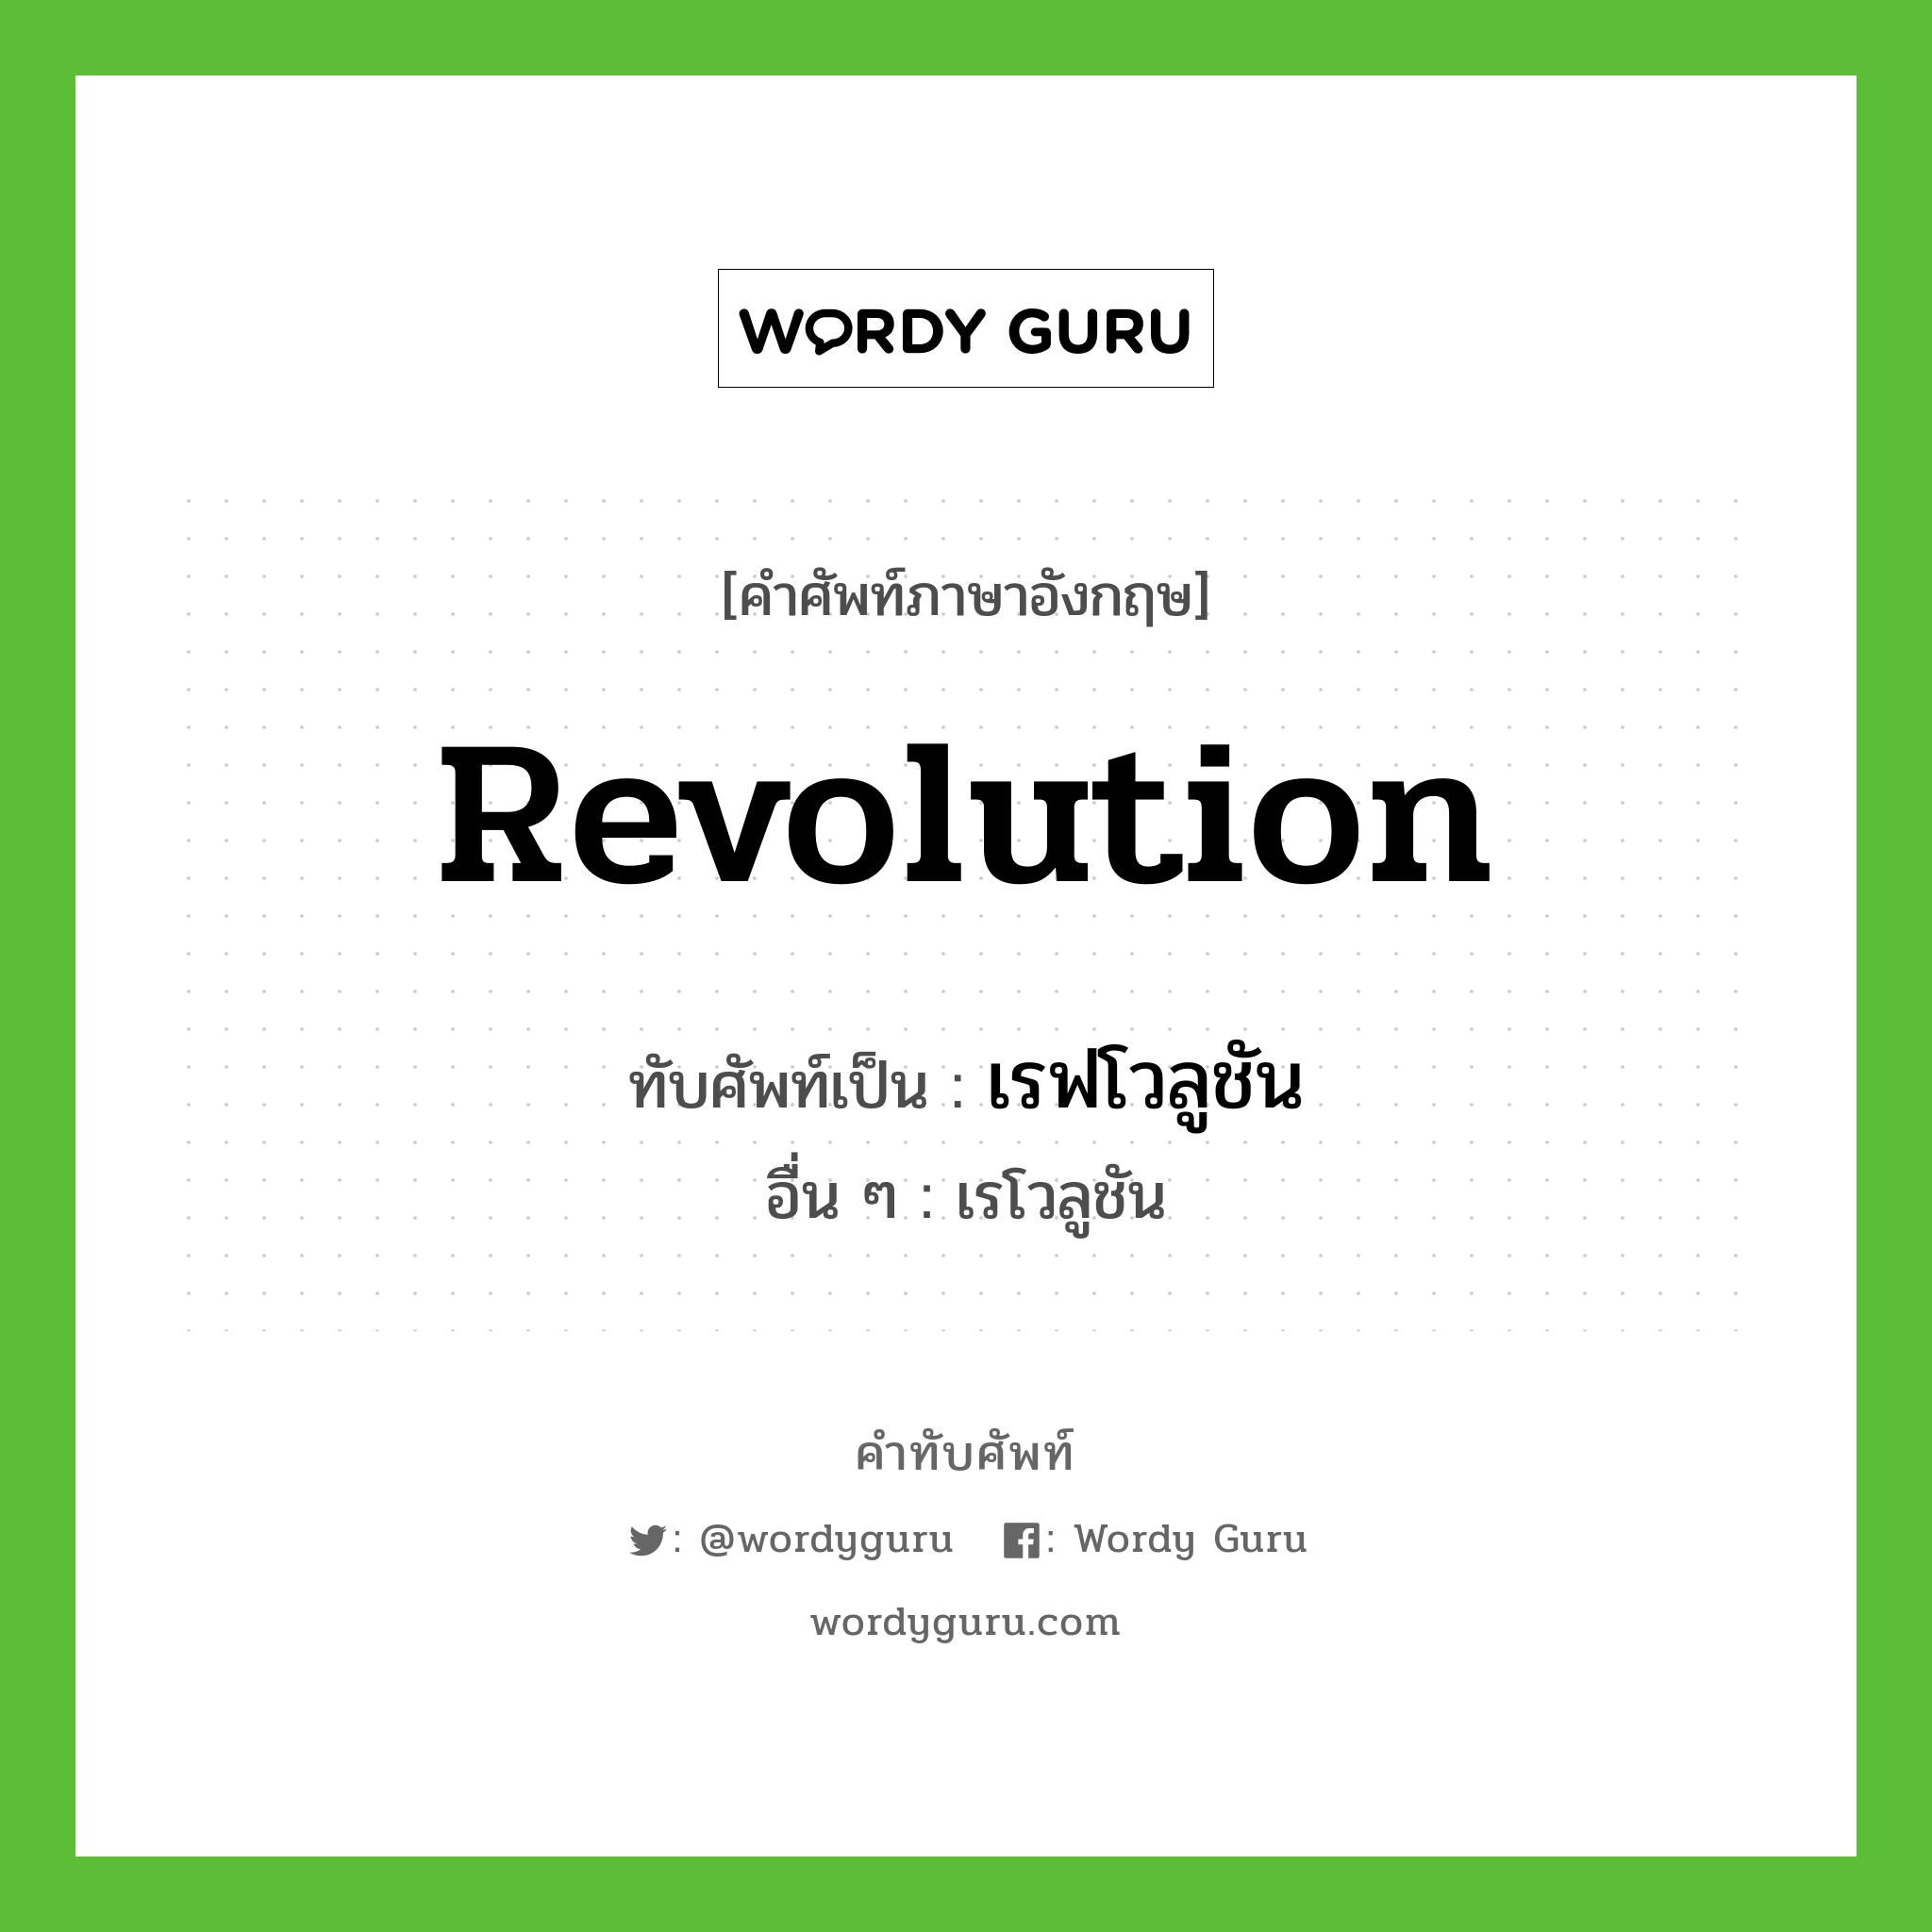 revolution เขียนเป็นคำไทยว่าอะไร?, คำศัพท์ภาษาอังกฤษ revolution ทับศัพท์เป็น เรฟโวลูชัน อื่น ๆ เรโวลูชัน